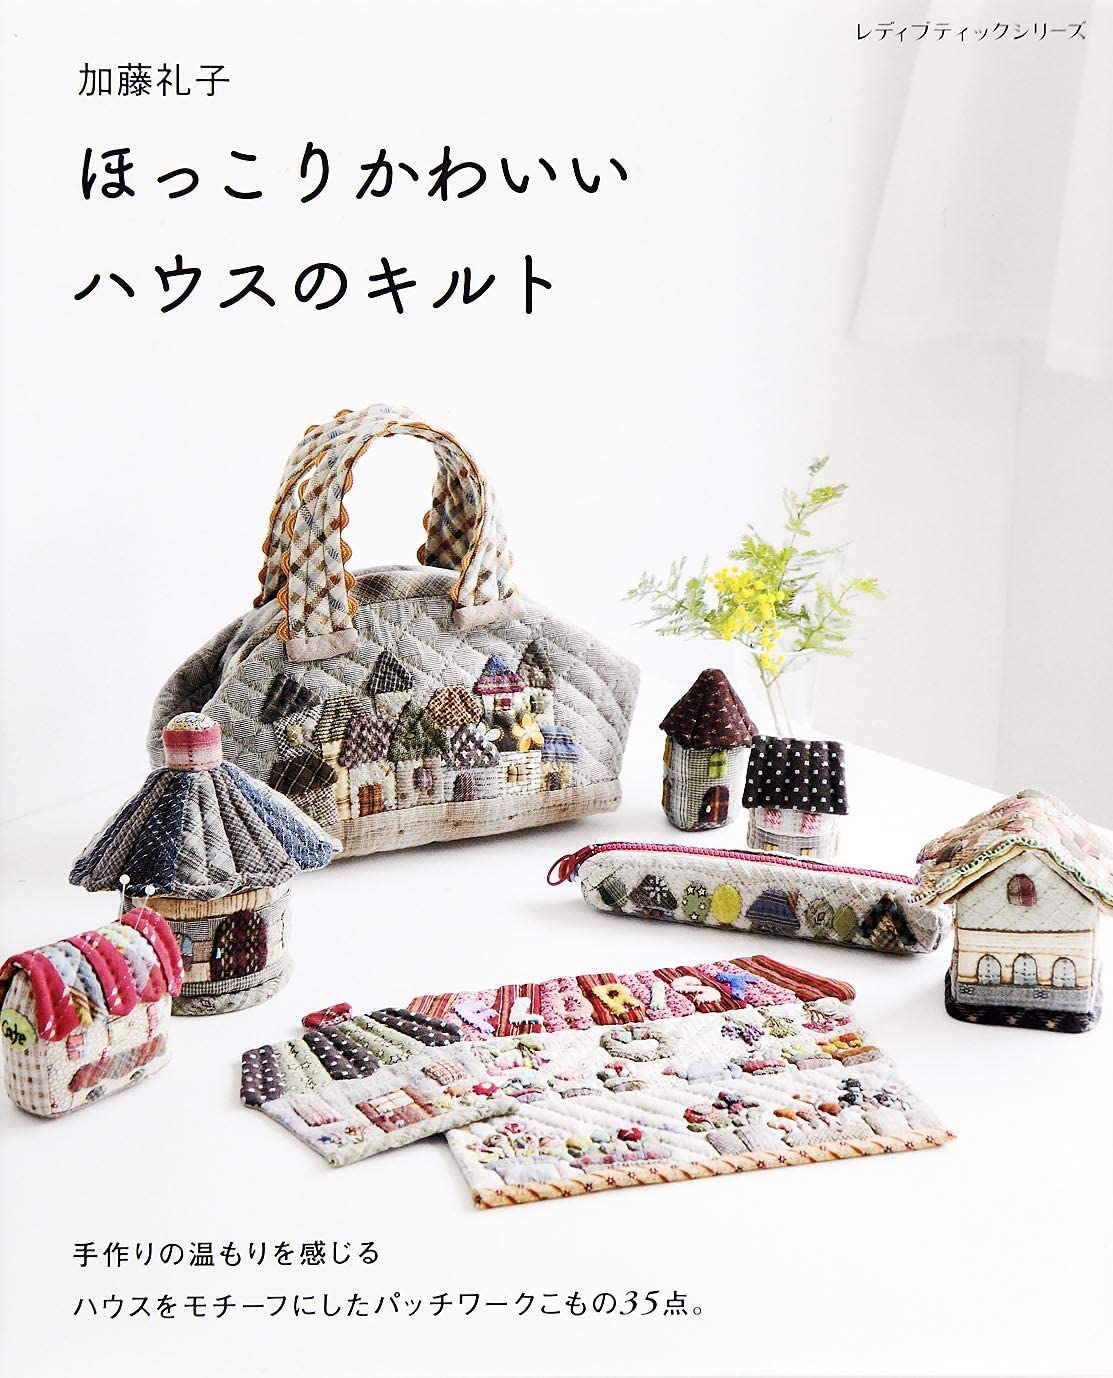 Reiko Kato Cute house quilt